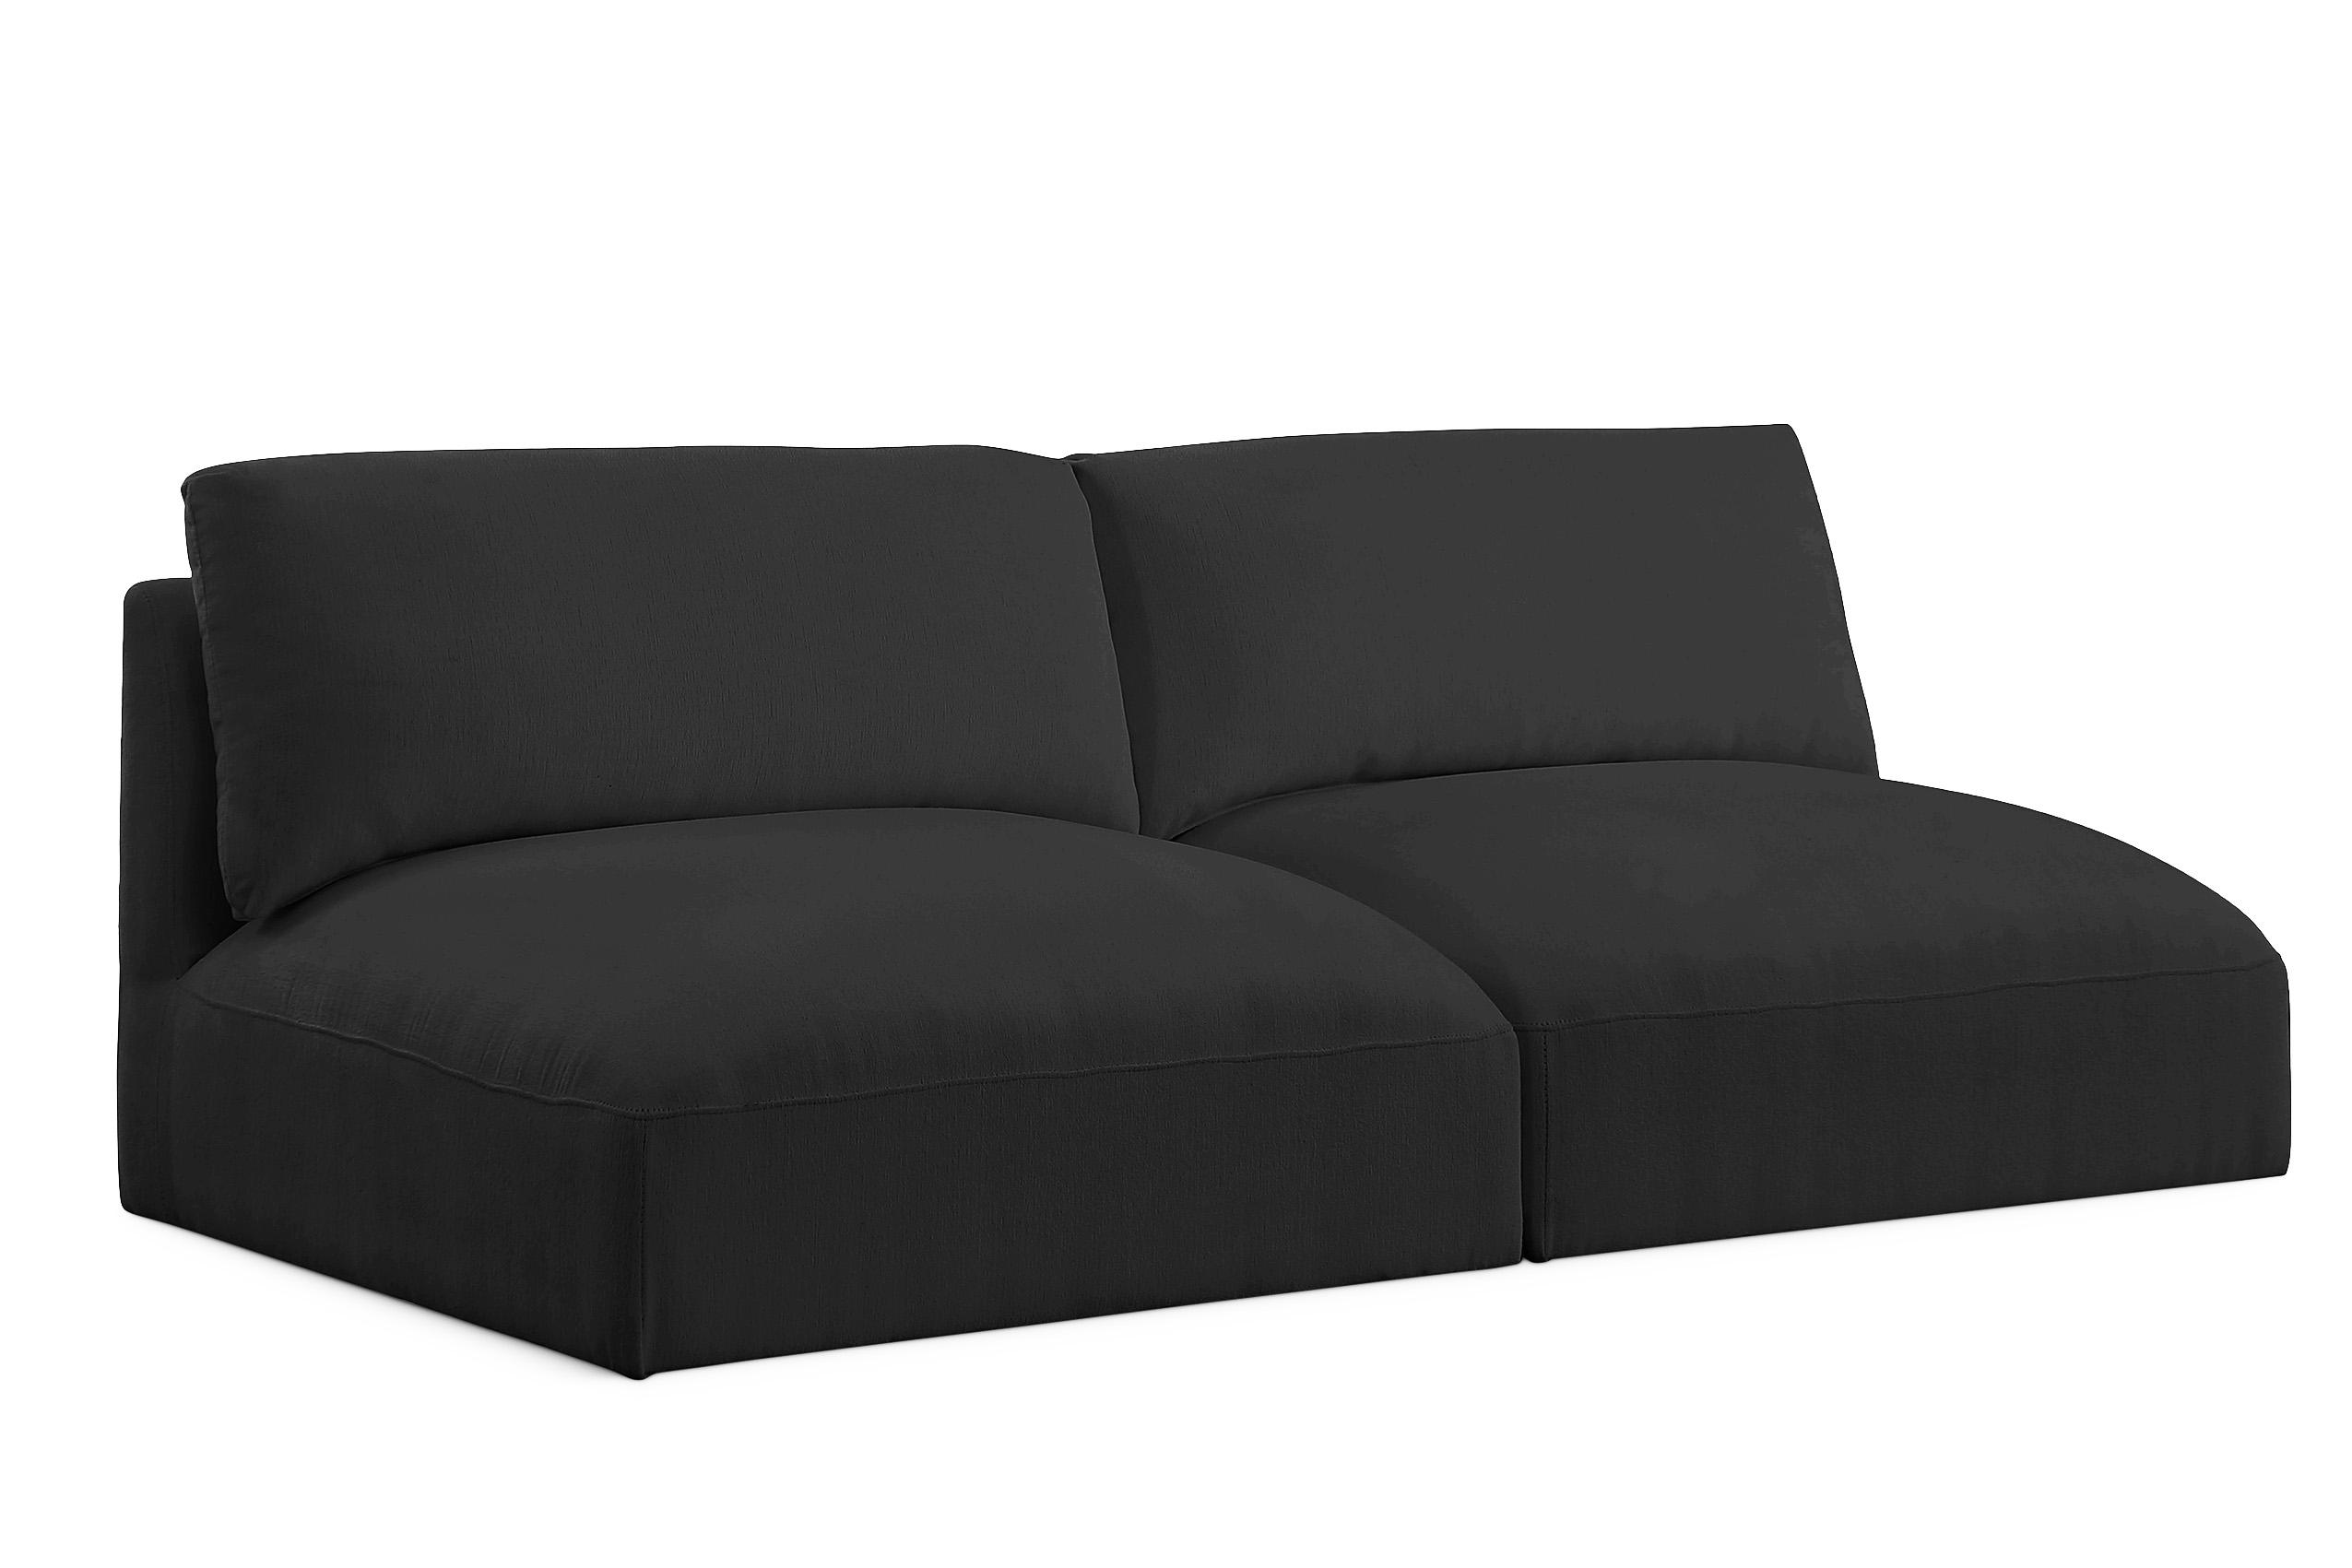 Contemporary, Modern Modular Sofa EASE 696Black-S76A 696Black-S76A in Black Fabric